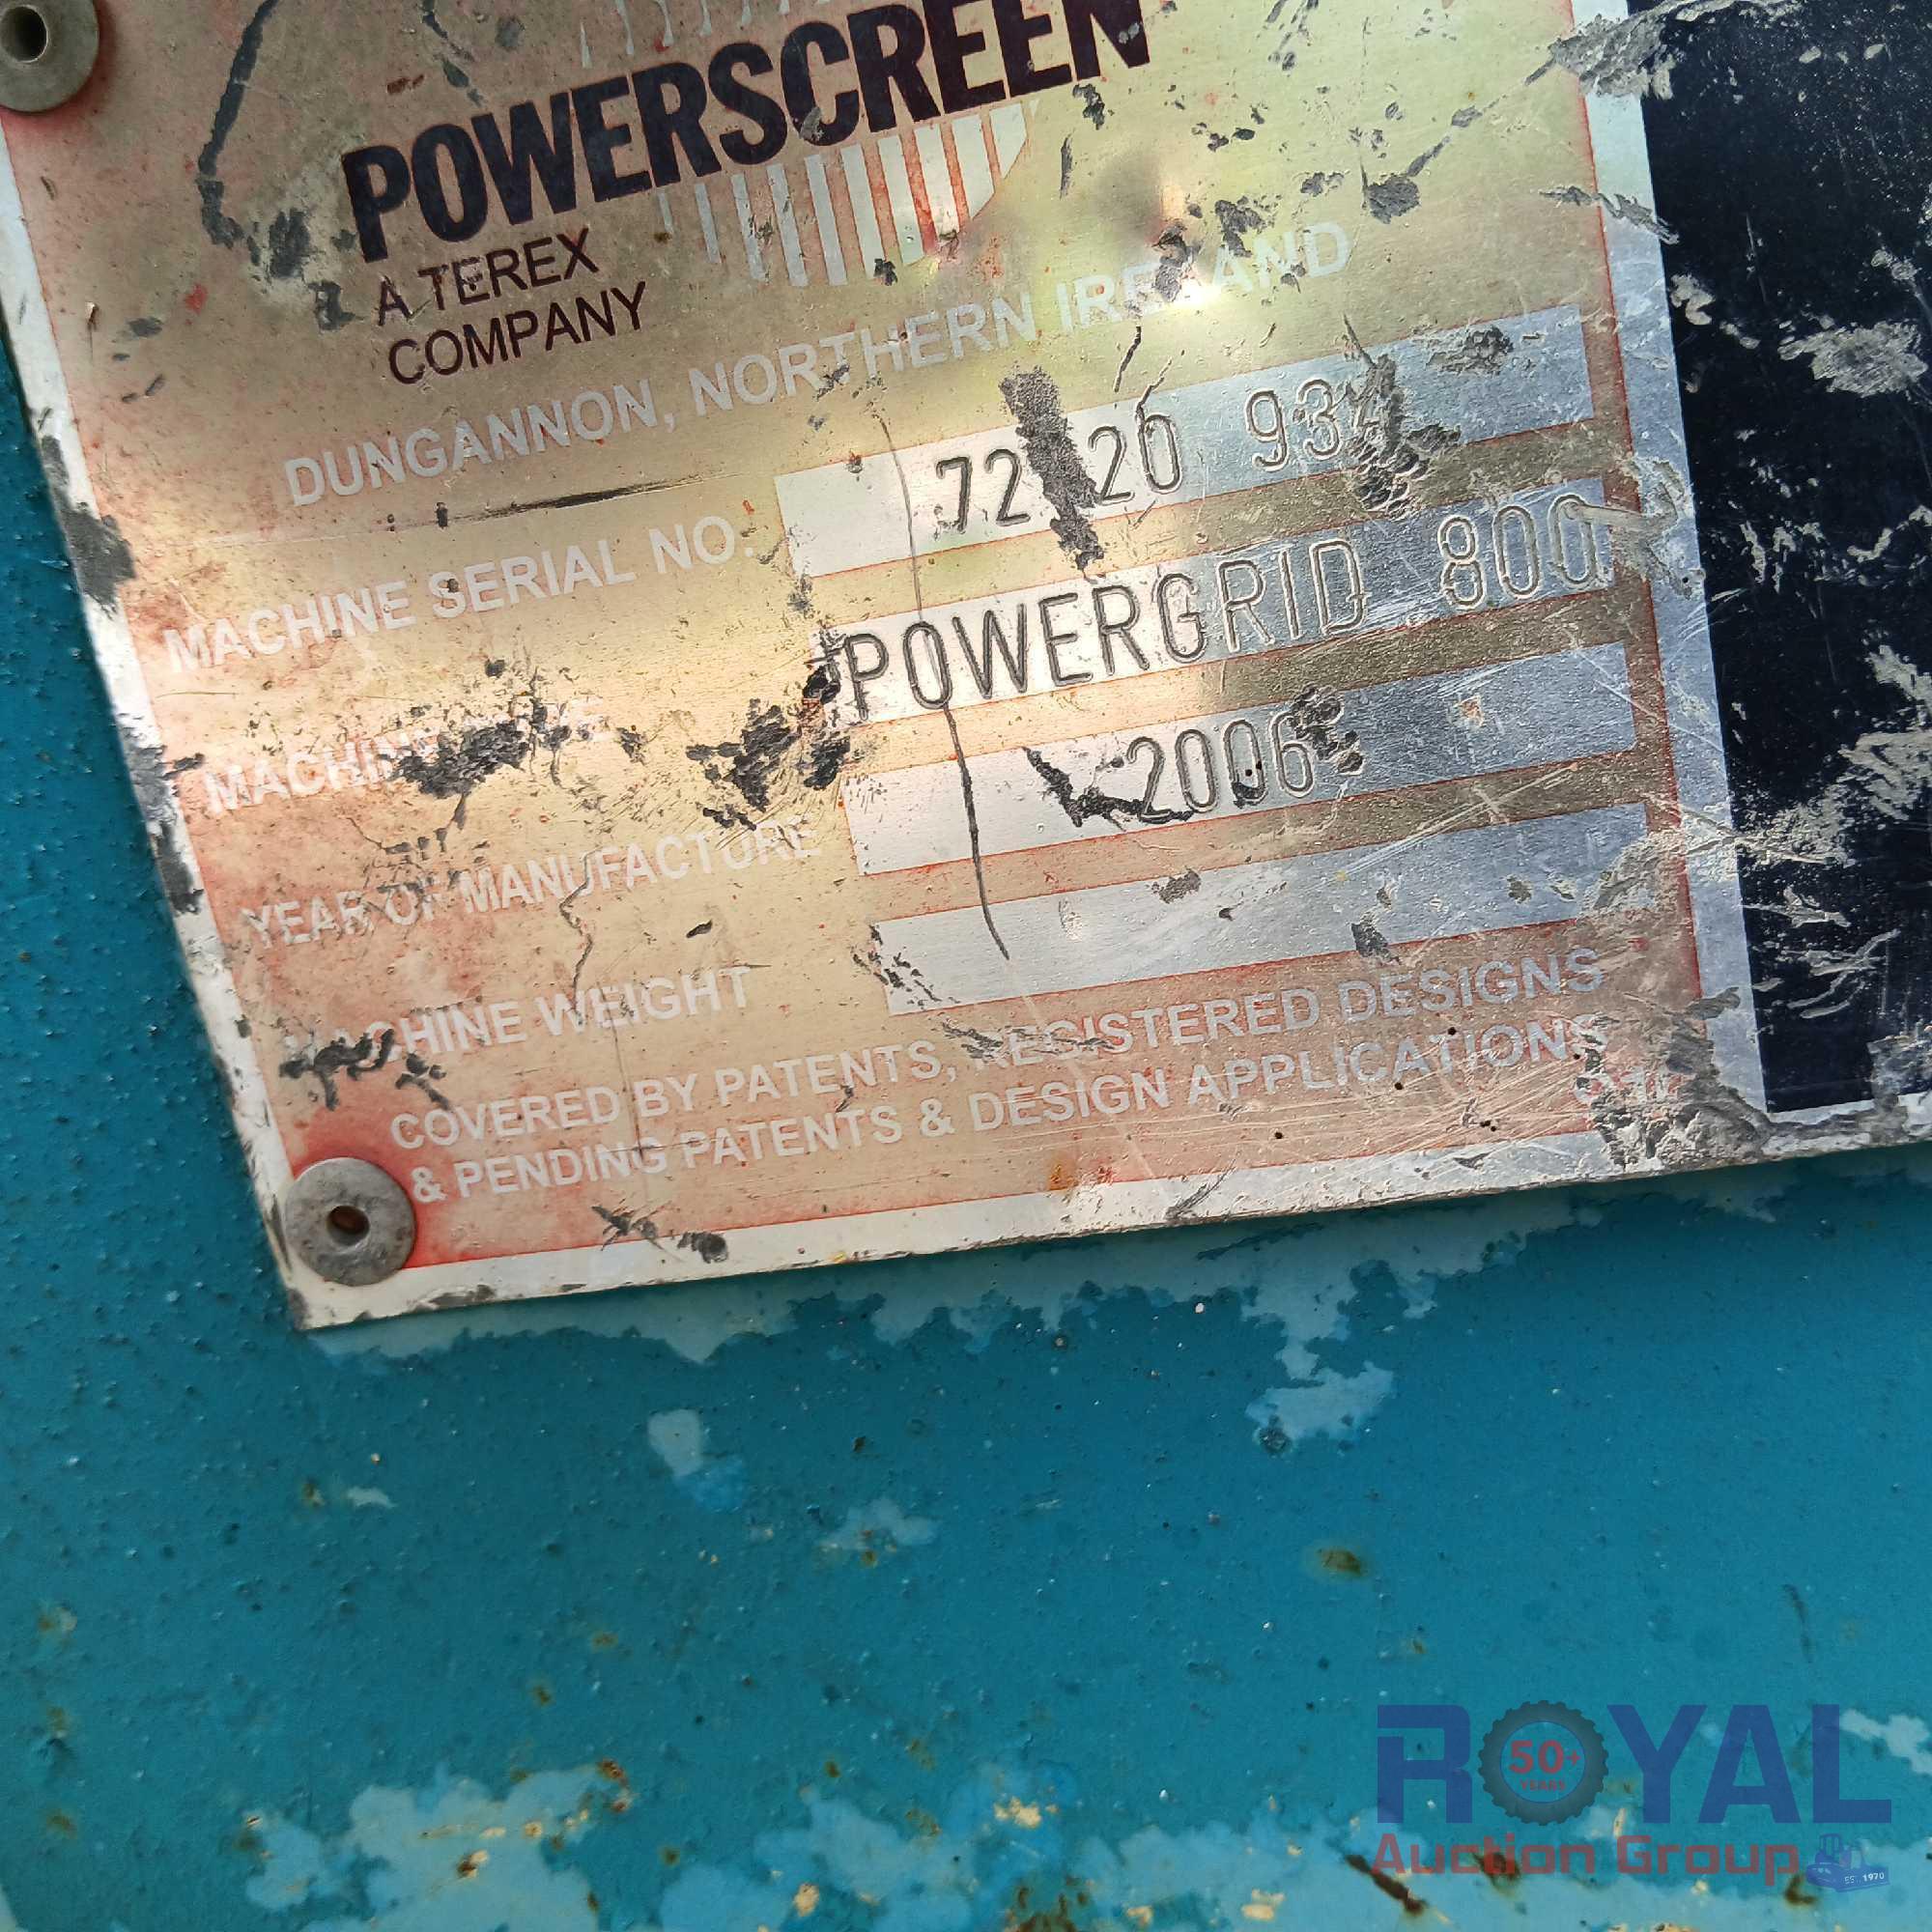 2006 Powerscreen Powergrid 800 Towable Screener